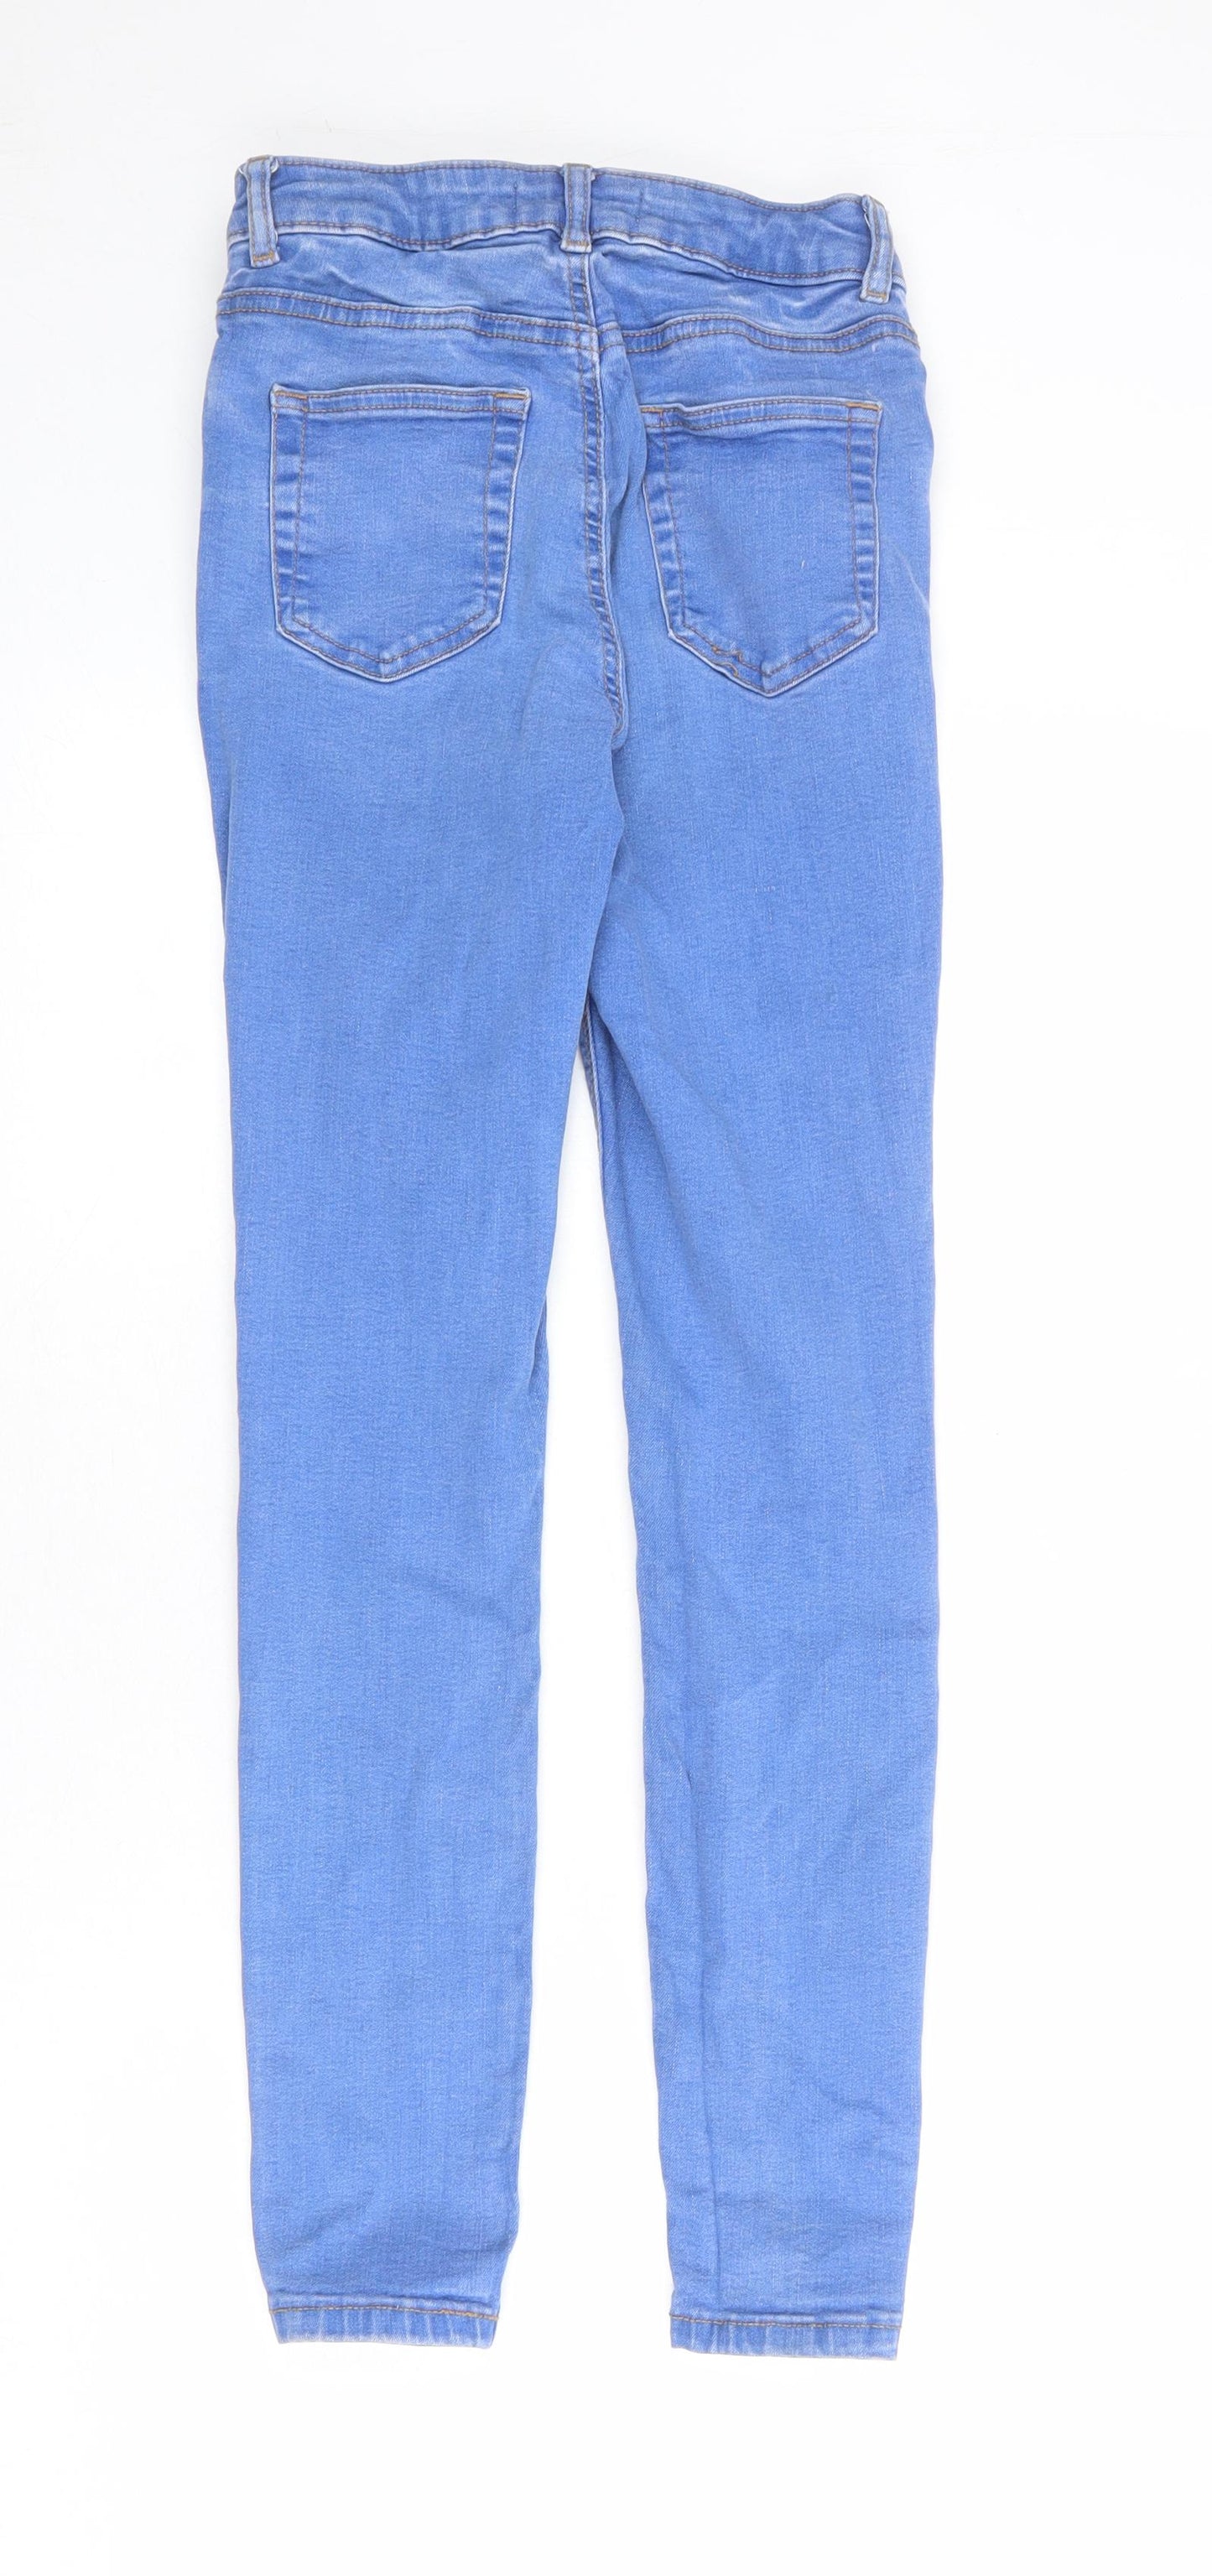 Denim & Co. Womens Blue Cotton Skinny Jeans Size 10 L28 in Regular Zip